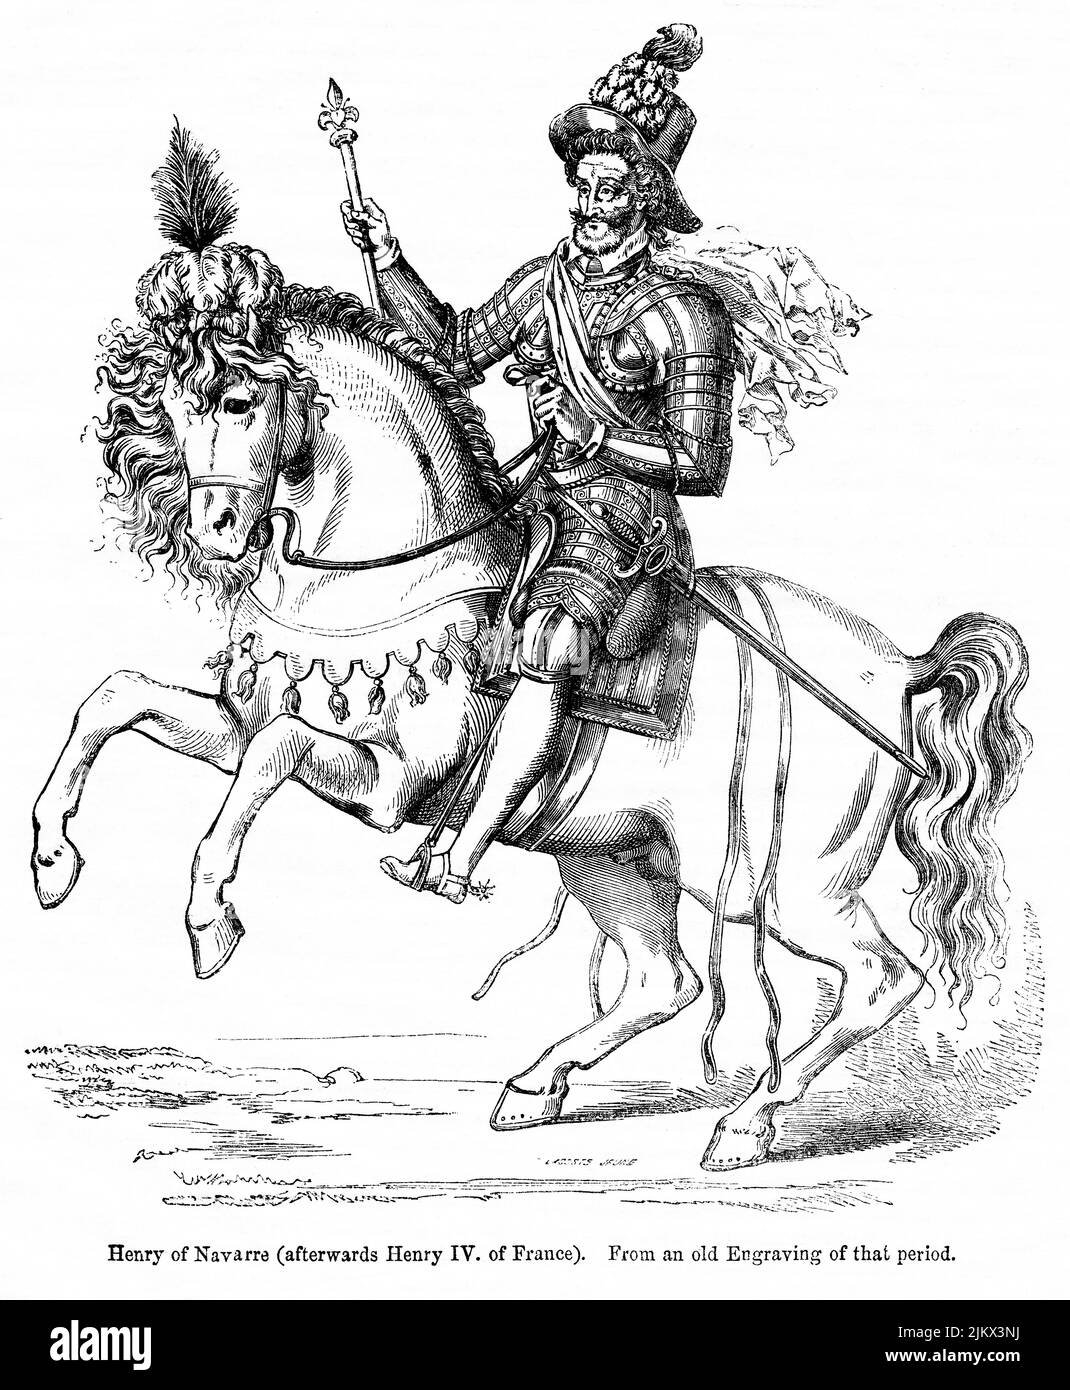 Henry de Navarre (après Henri IV de France), illustration du livre, « John Cassel's Illustrated History of England, Volume II », texte de William Howitt, Cassell, Petter, et Galpin, Londres, 1858 Banque D'Images